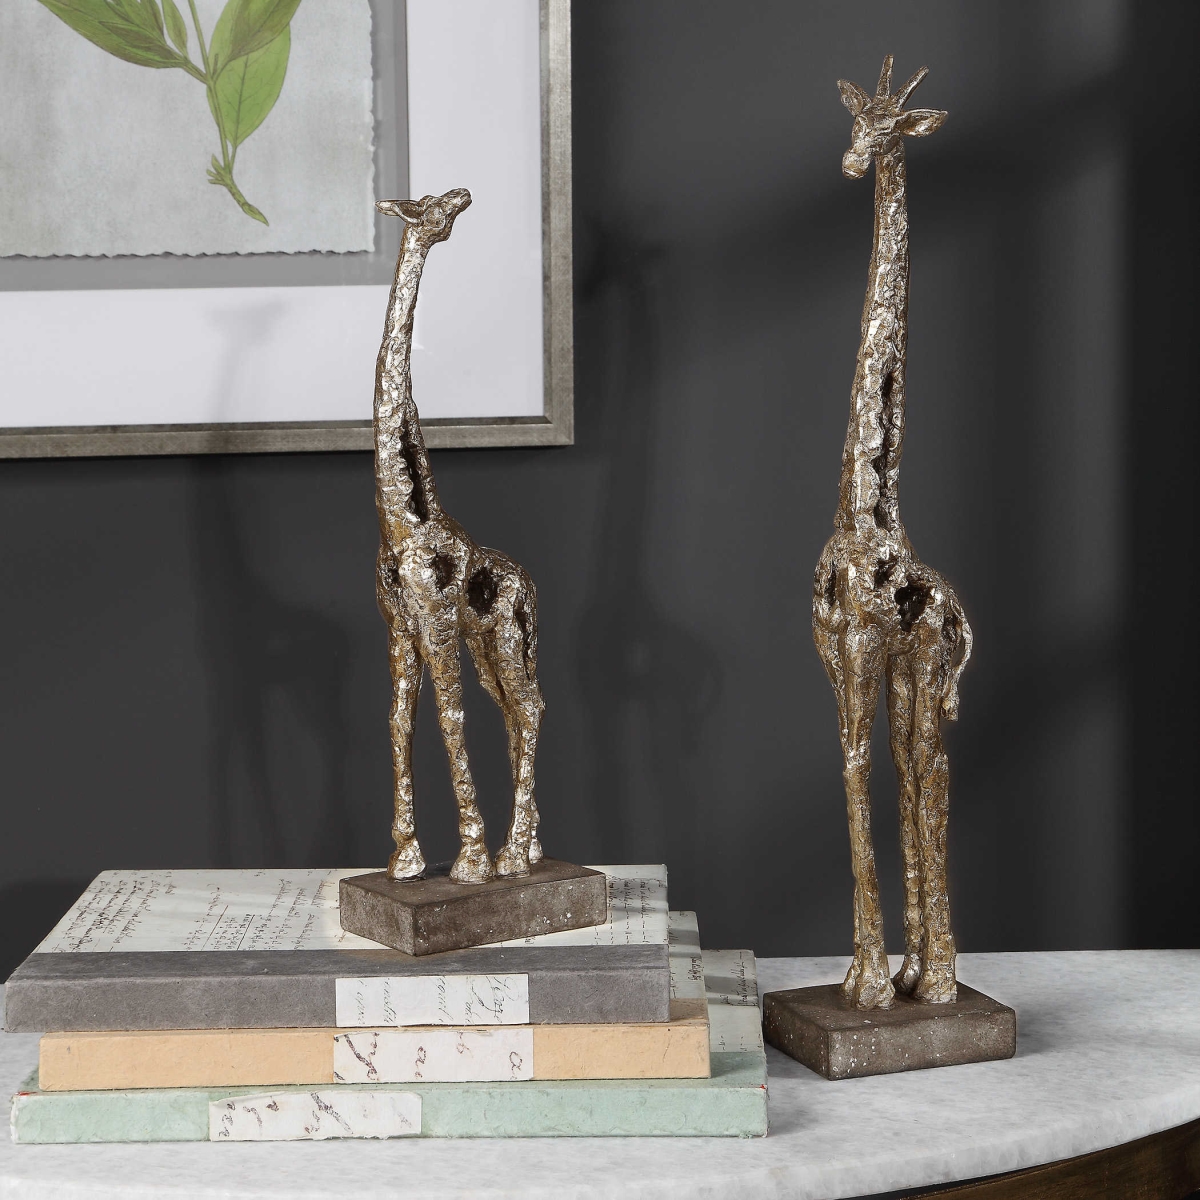 Picture of 212 Main 17522 Masai Giraffe Figurines - Set of 2